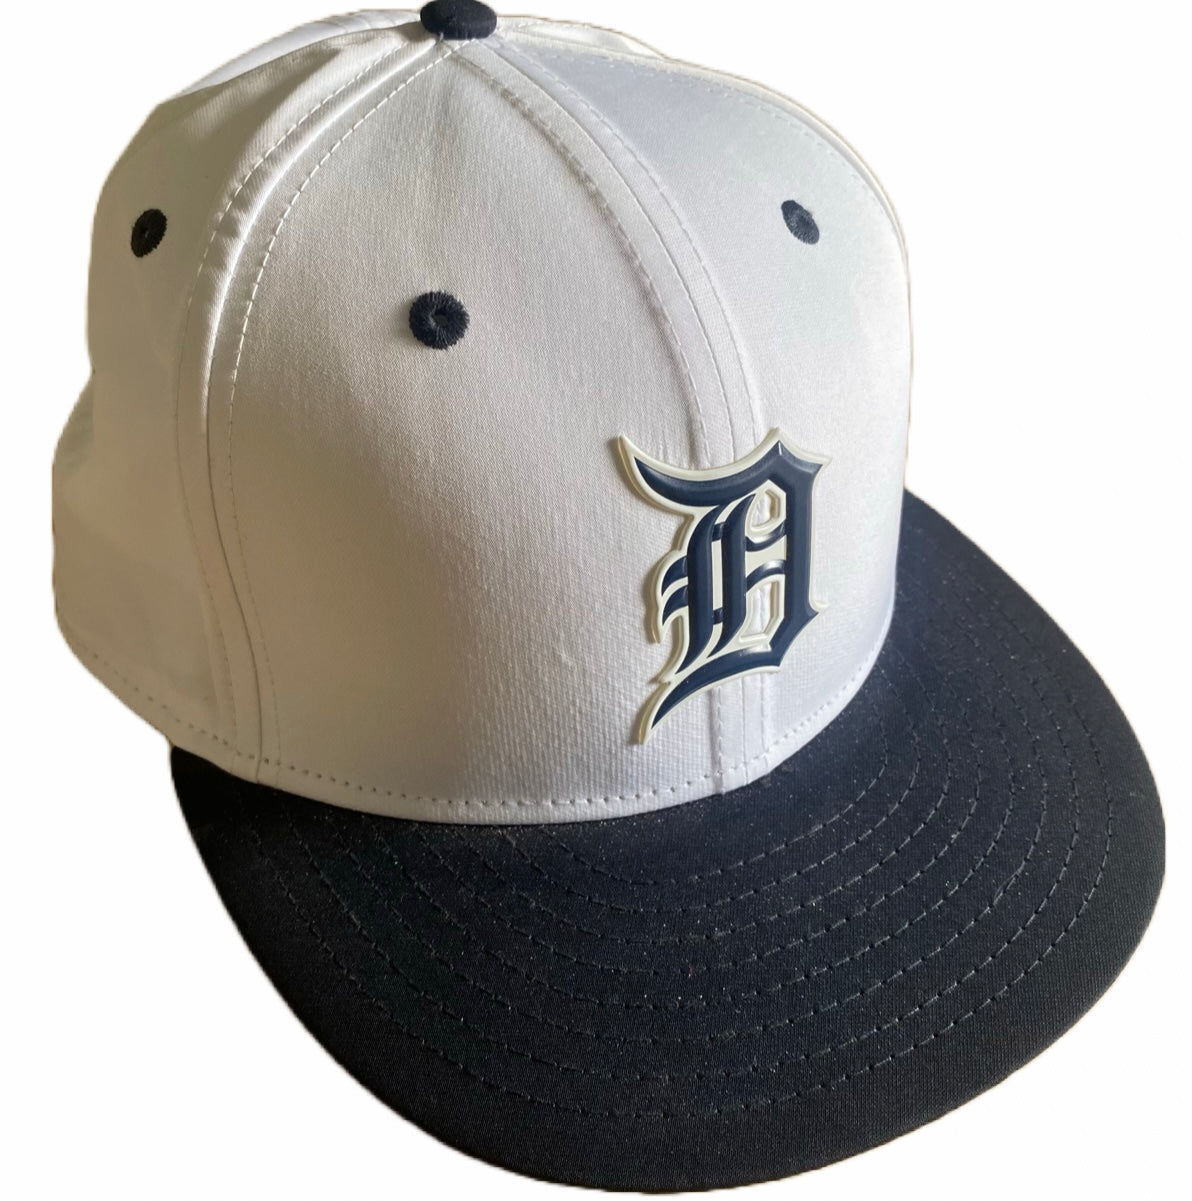 Secondhand New Era Detroit Tigers Hat